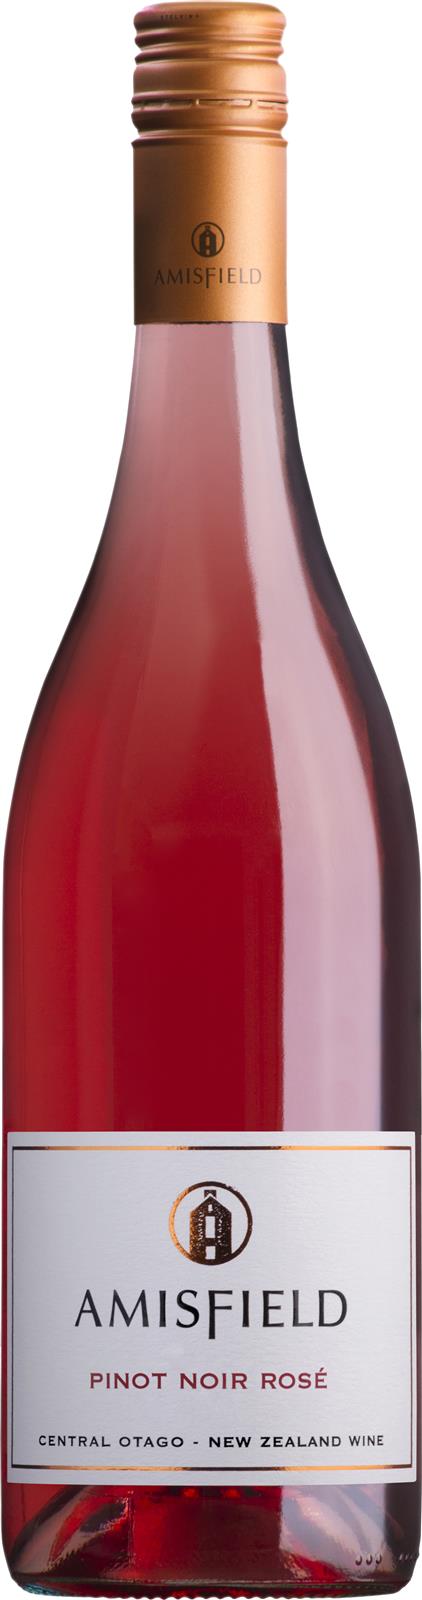 Amisfield Central Otago Pinot Noir Rosé 2020